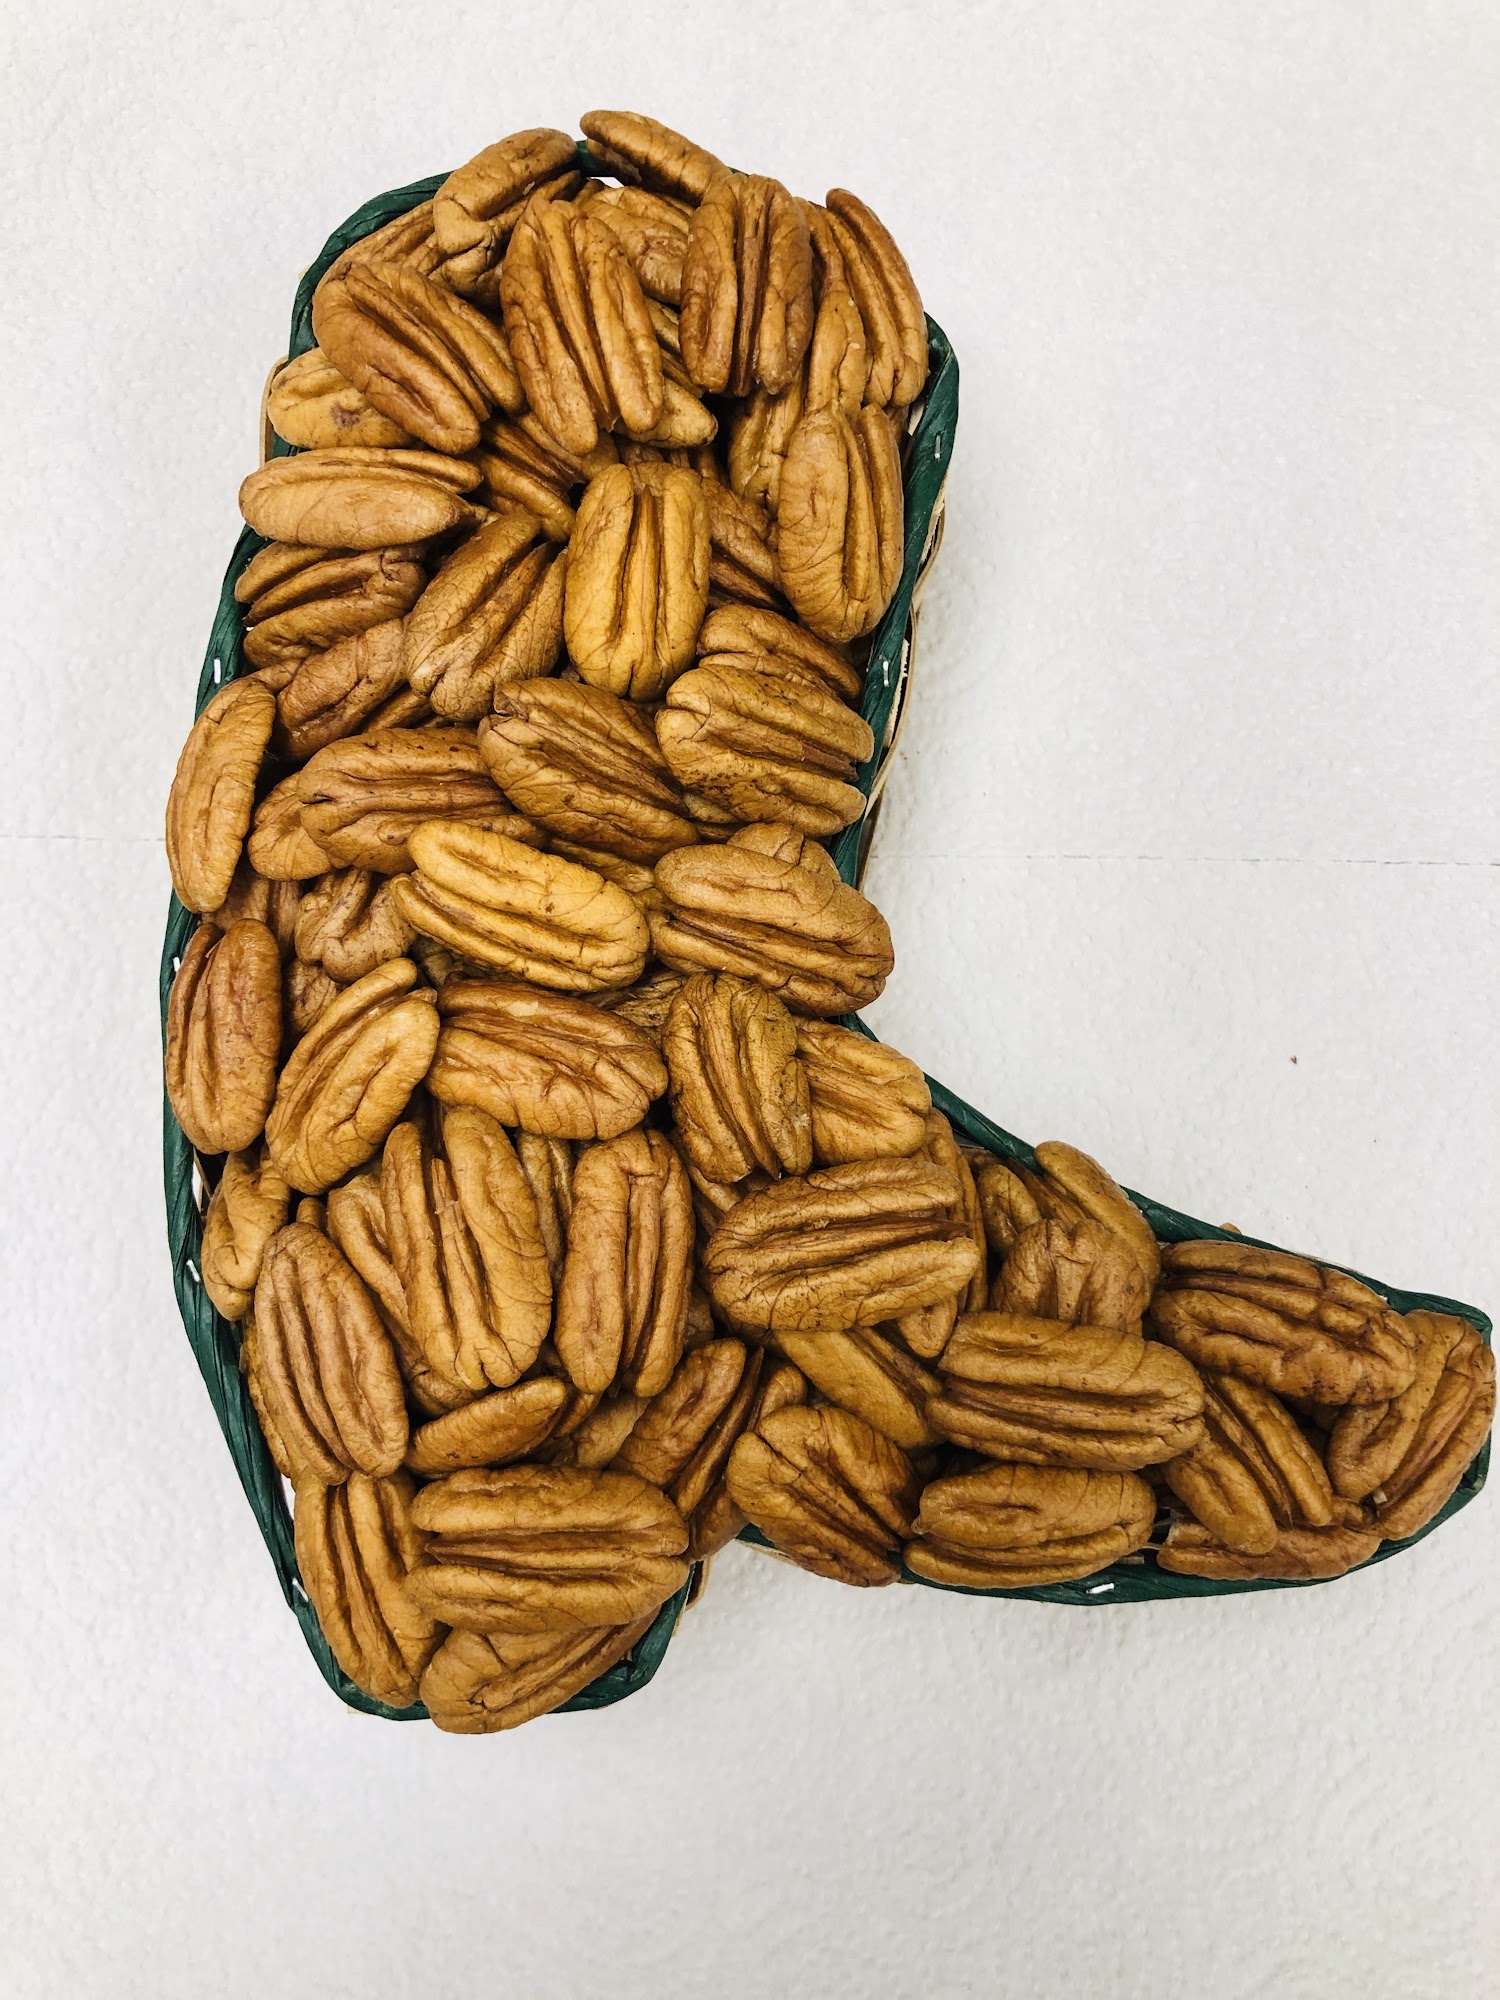 Vending Nut Co